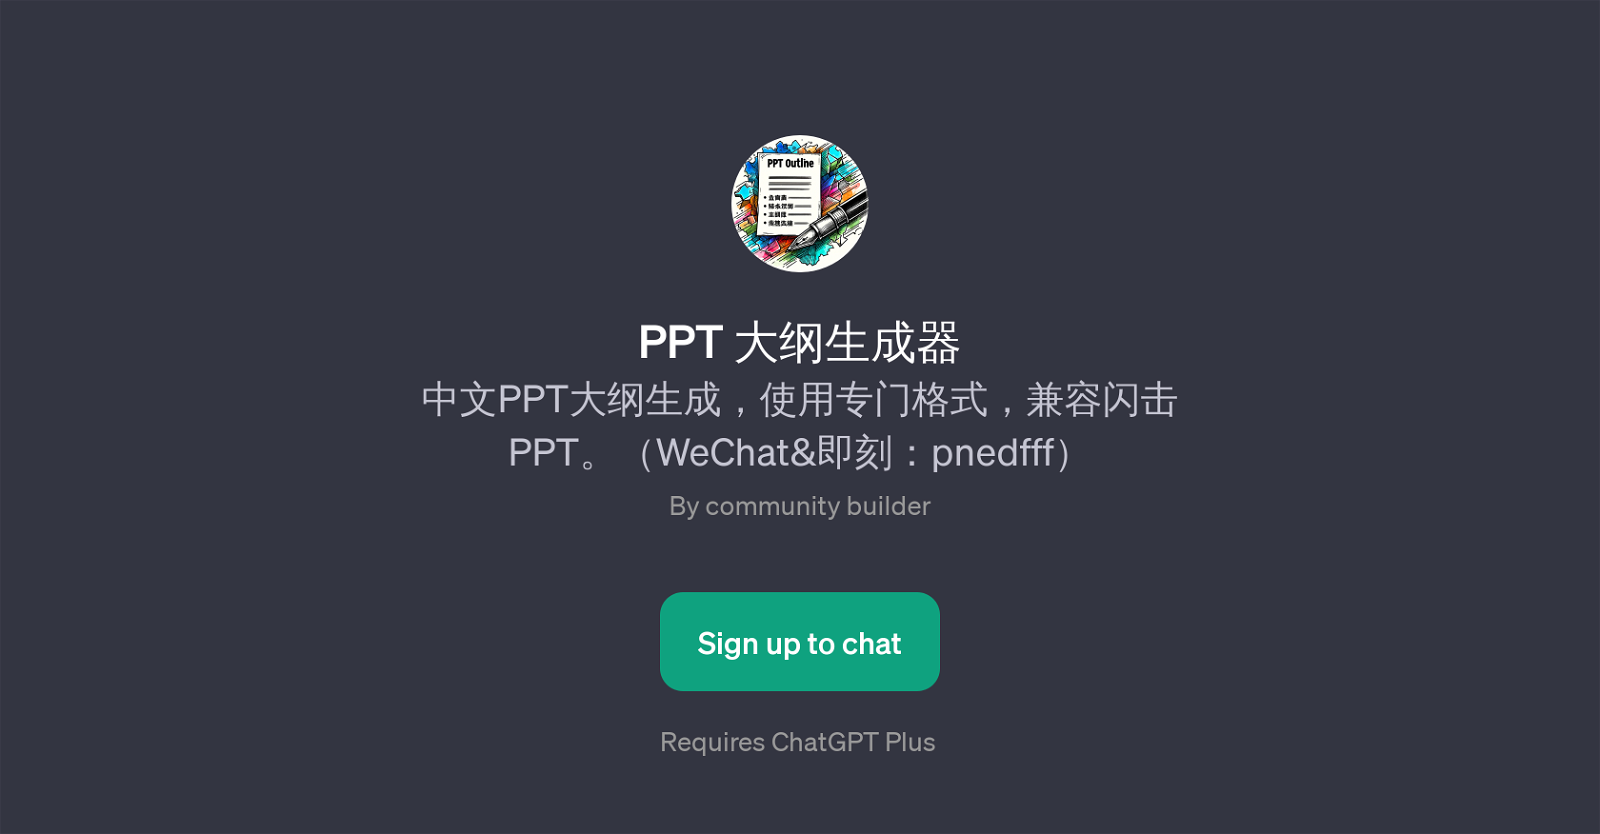 PPT website